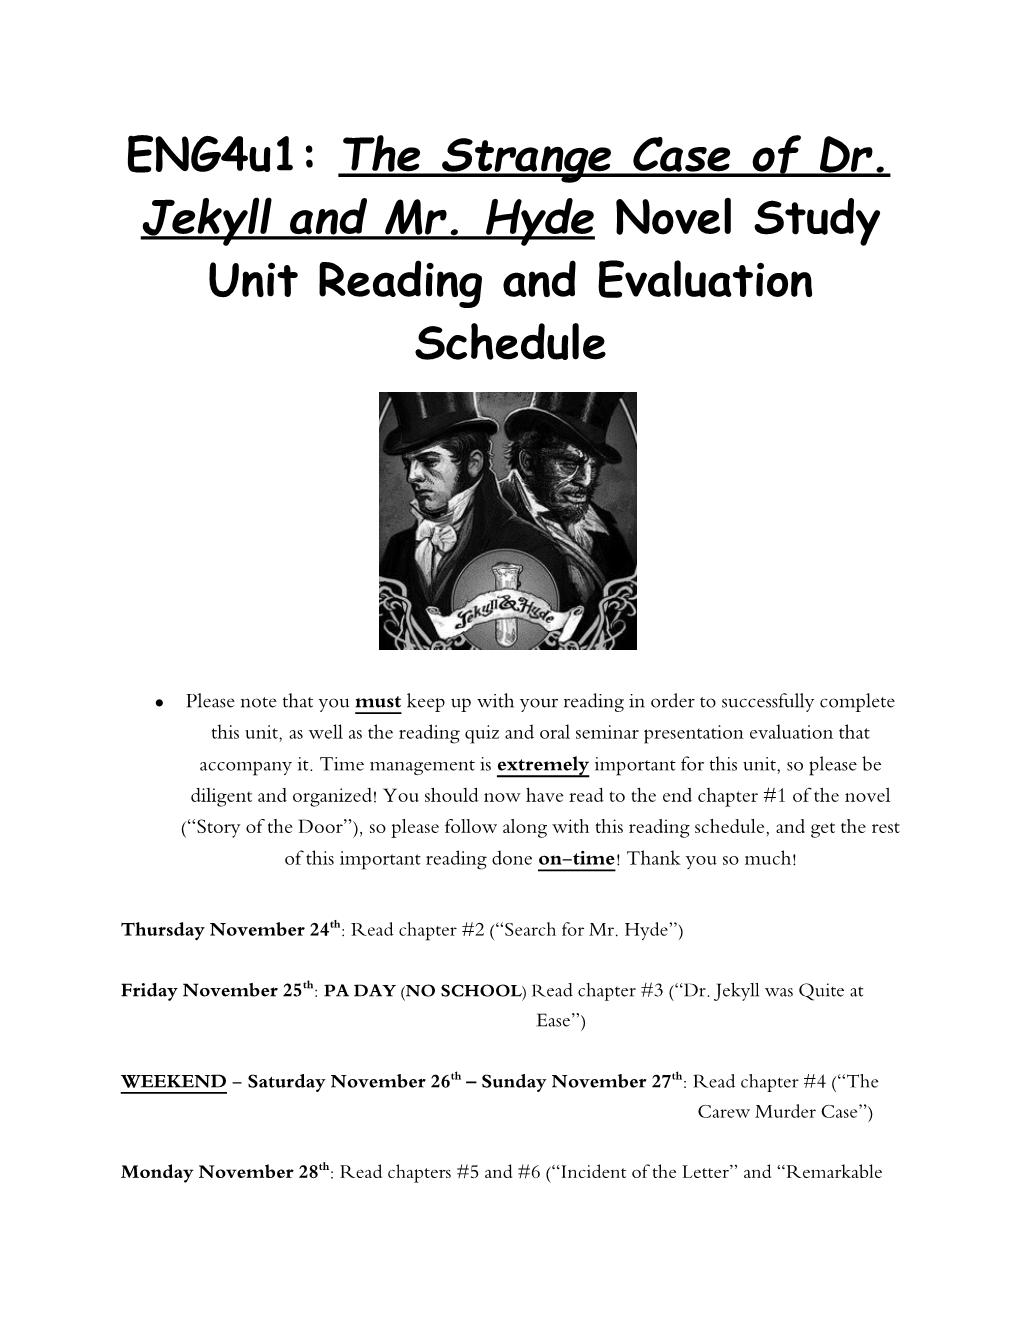 Eng4u1: the Strange Case of Dr. Jekyll and Mr. Hyde Novel Study Unit Reading and Evaluation